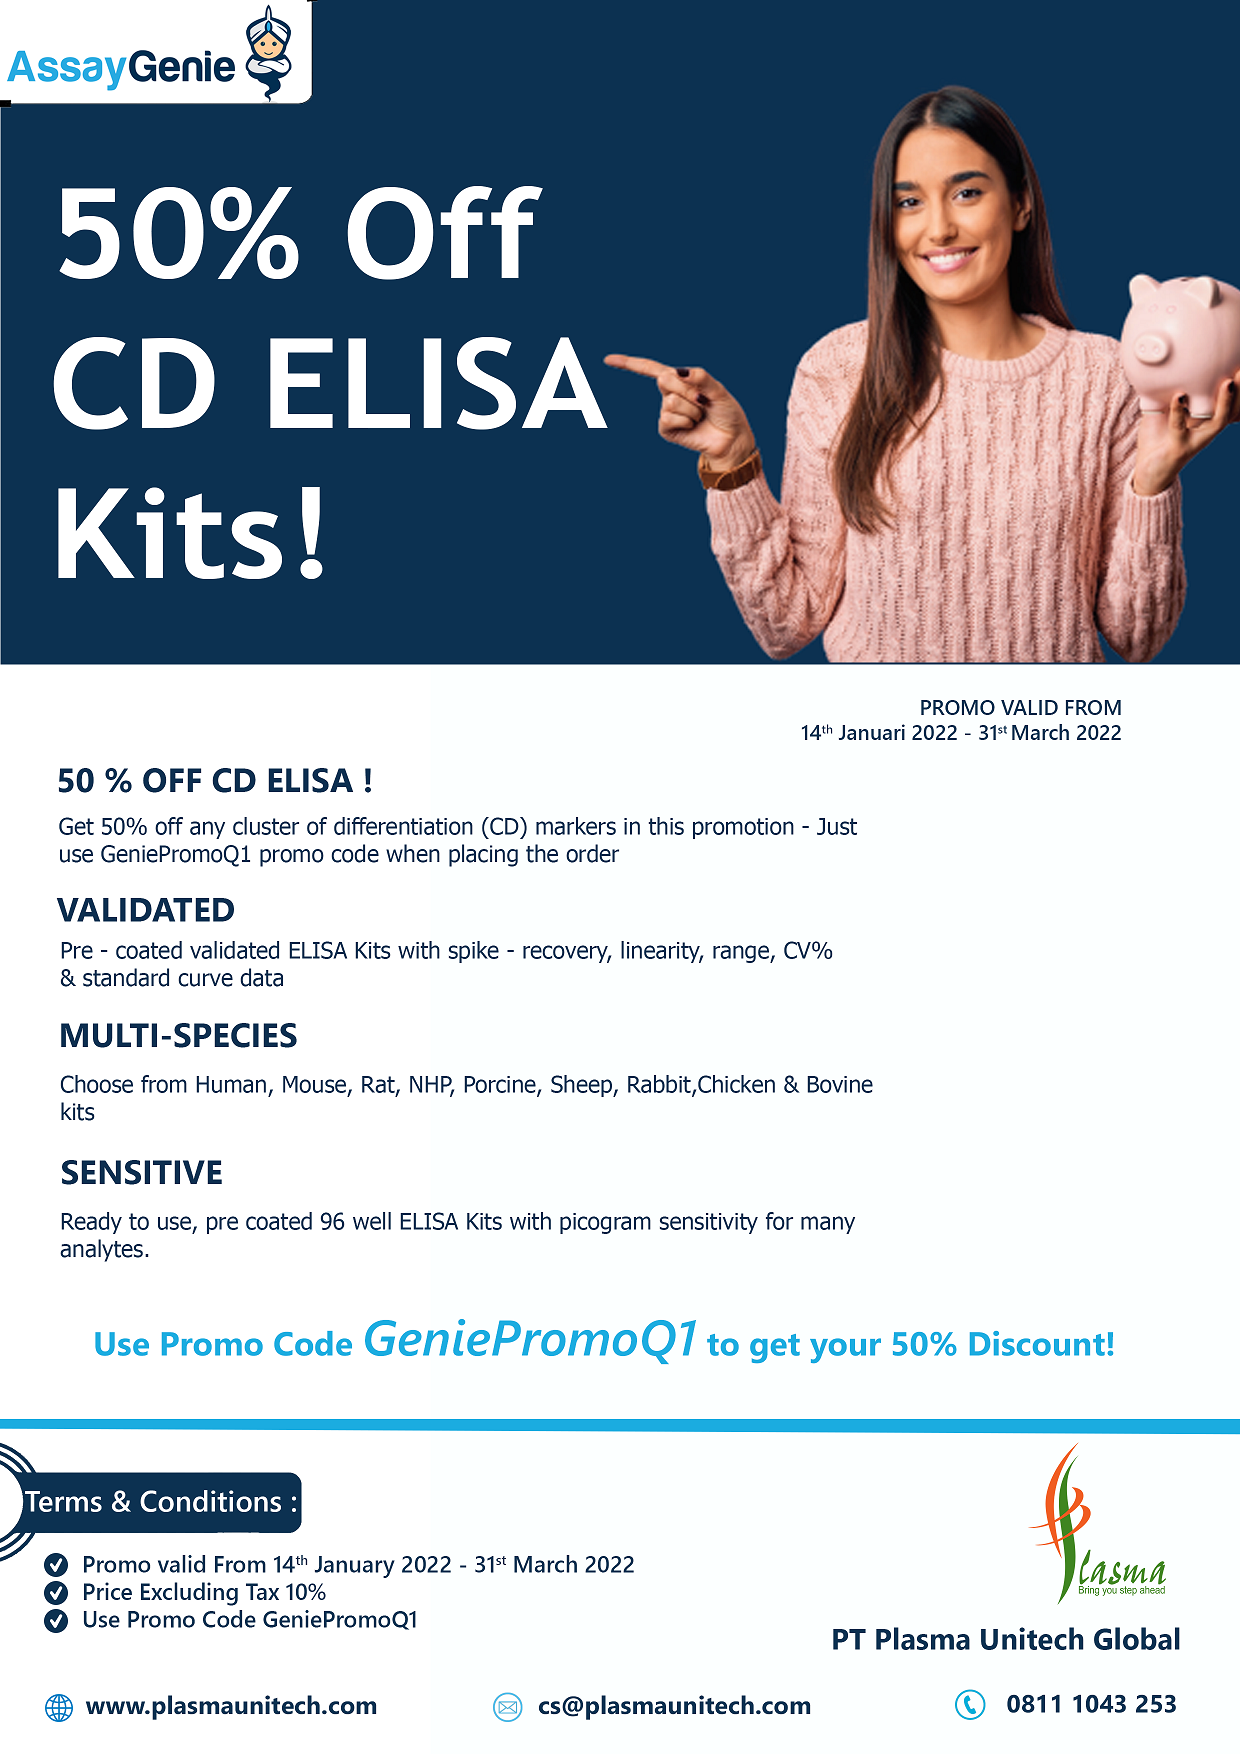 50 % OFF CD ELISA KITS !